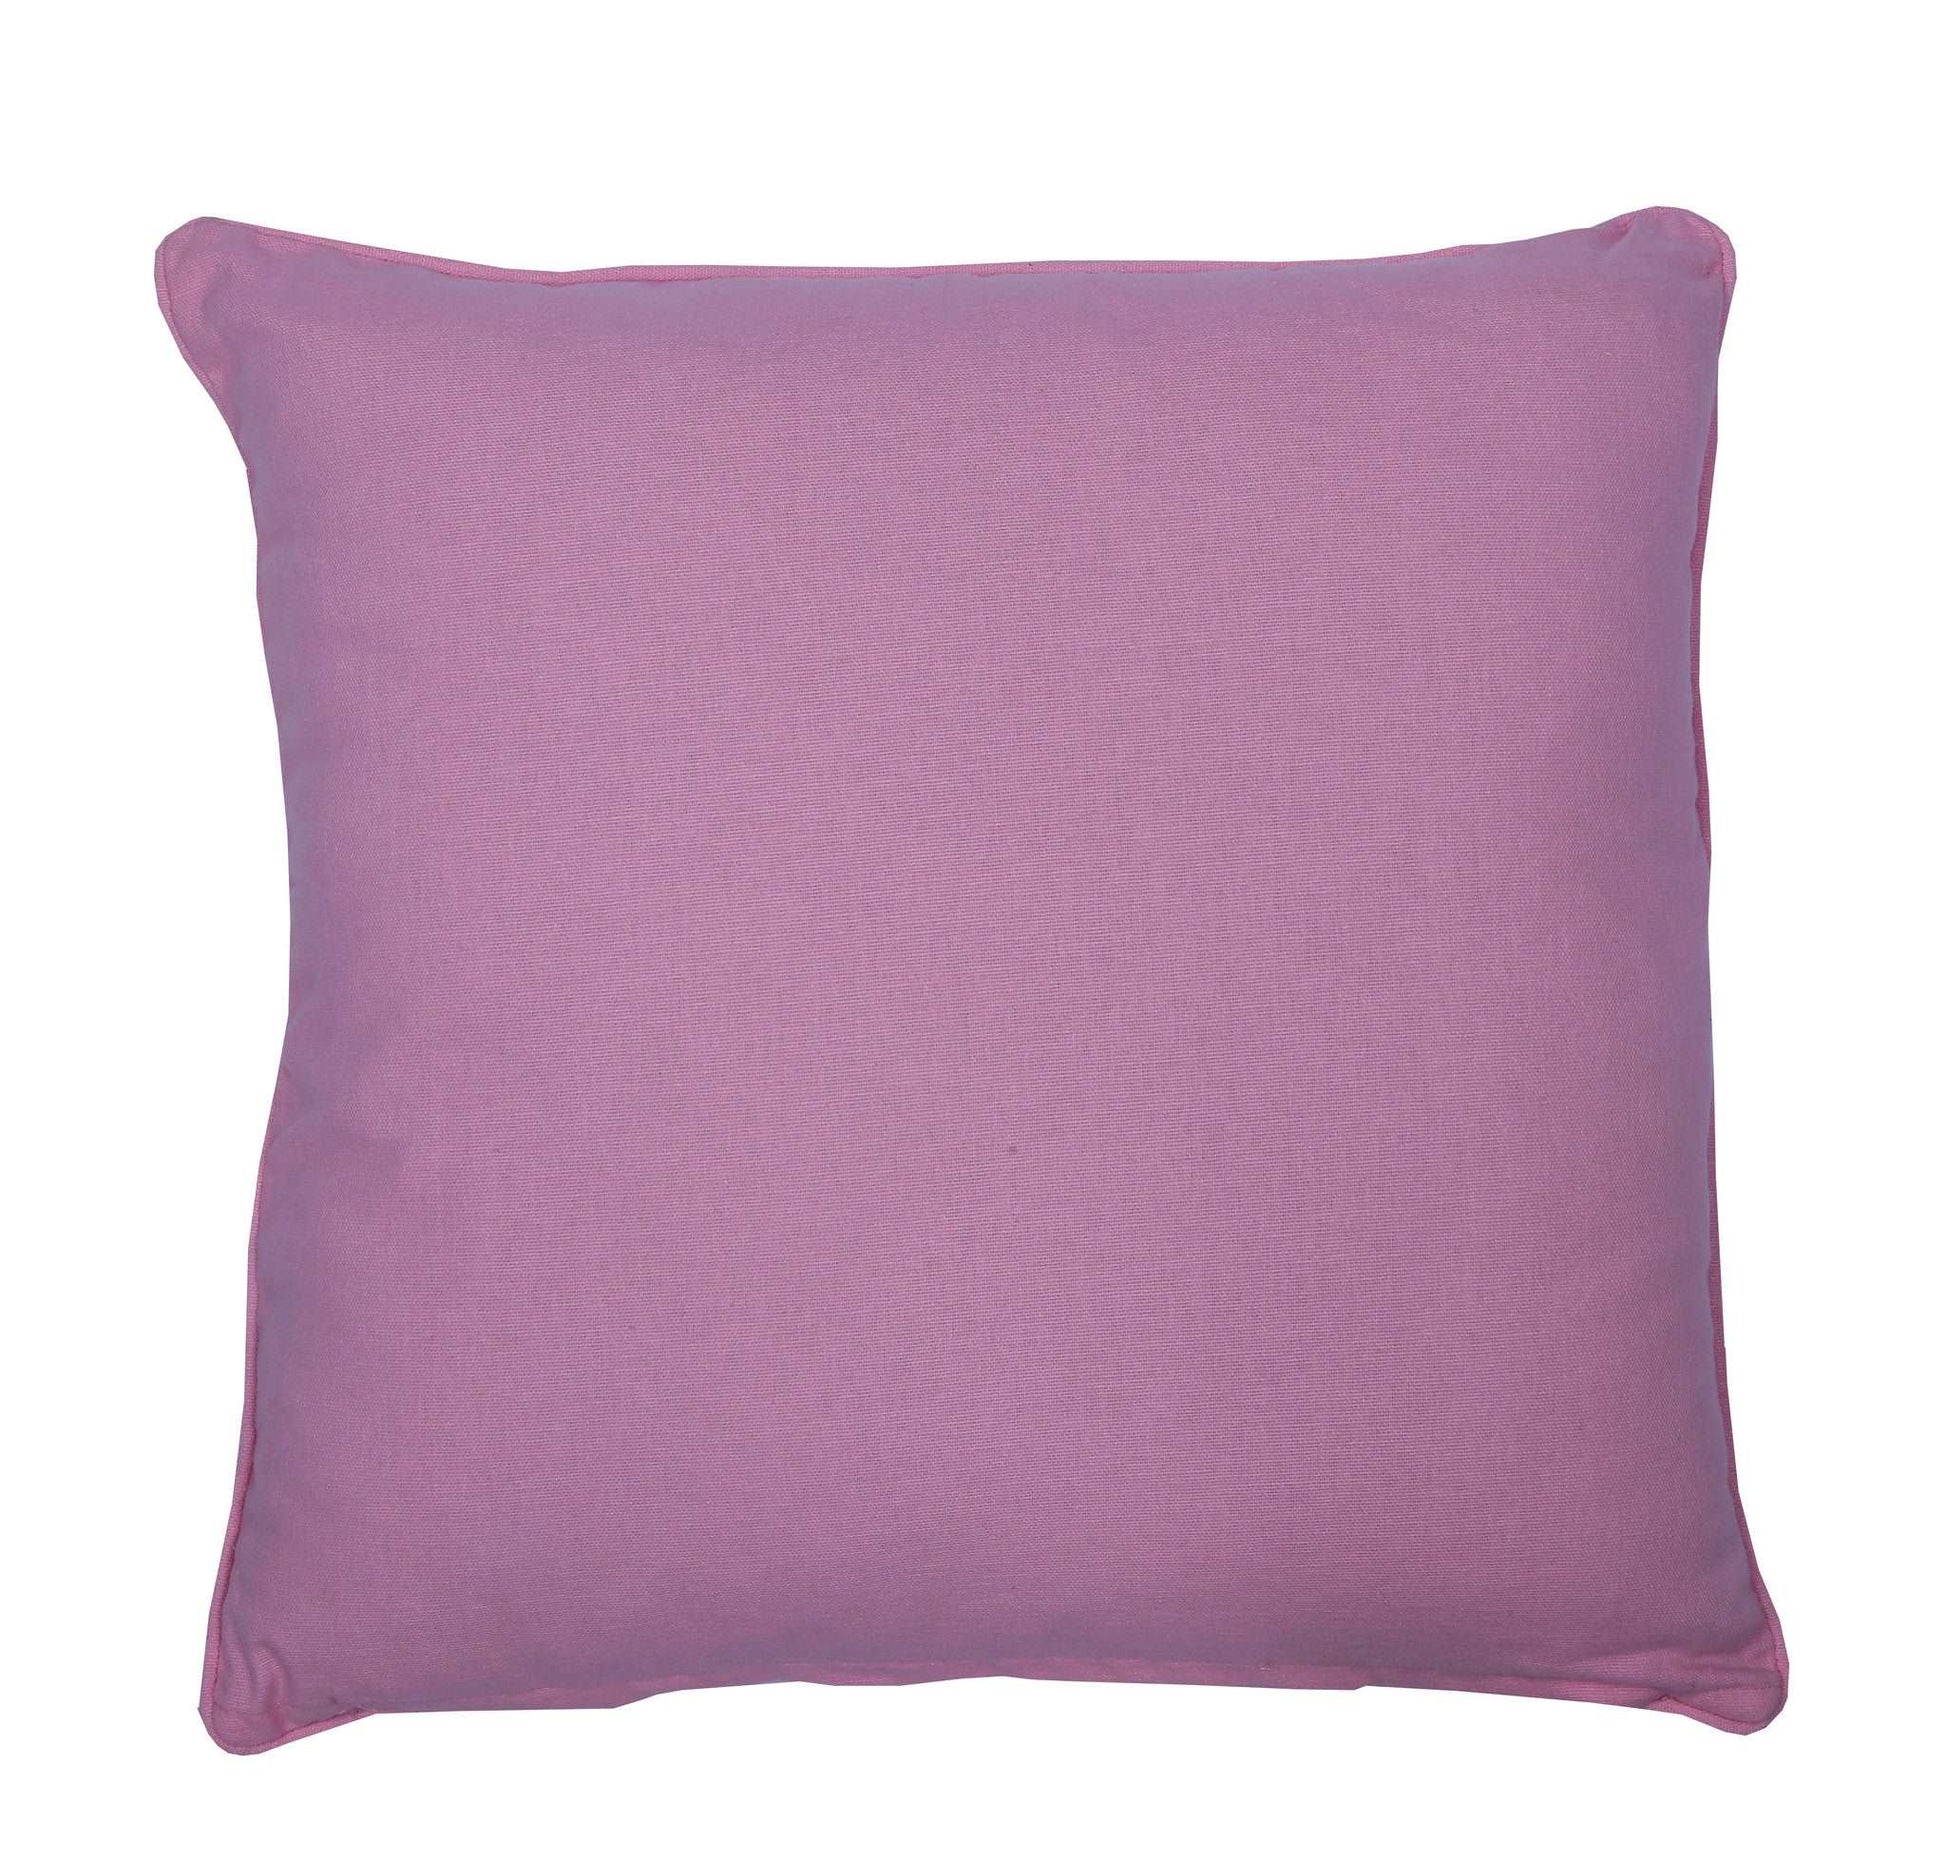 Cushion Cover - Polka Dot Pink